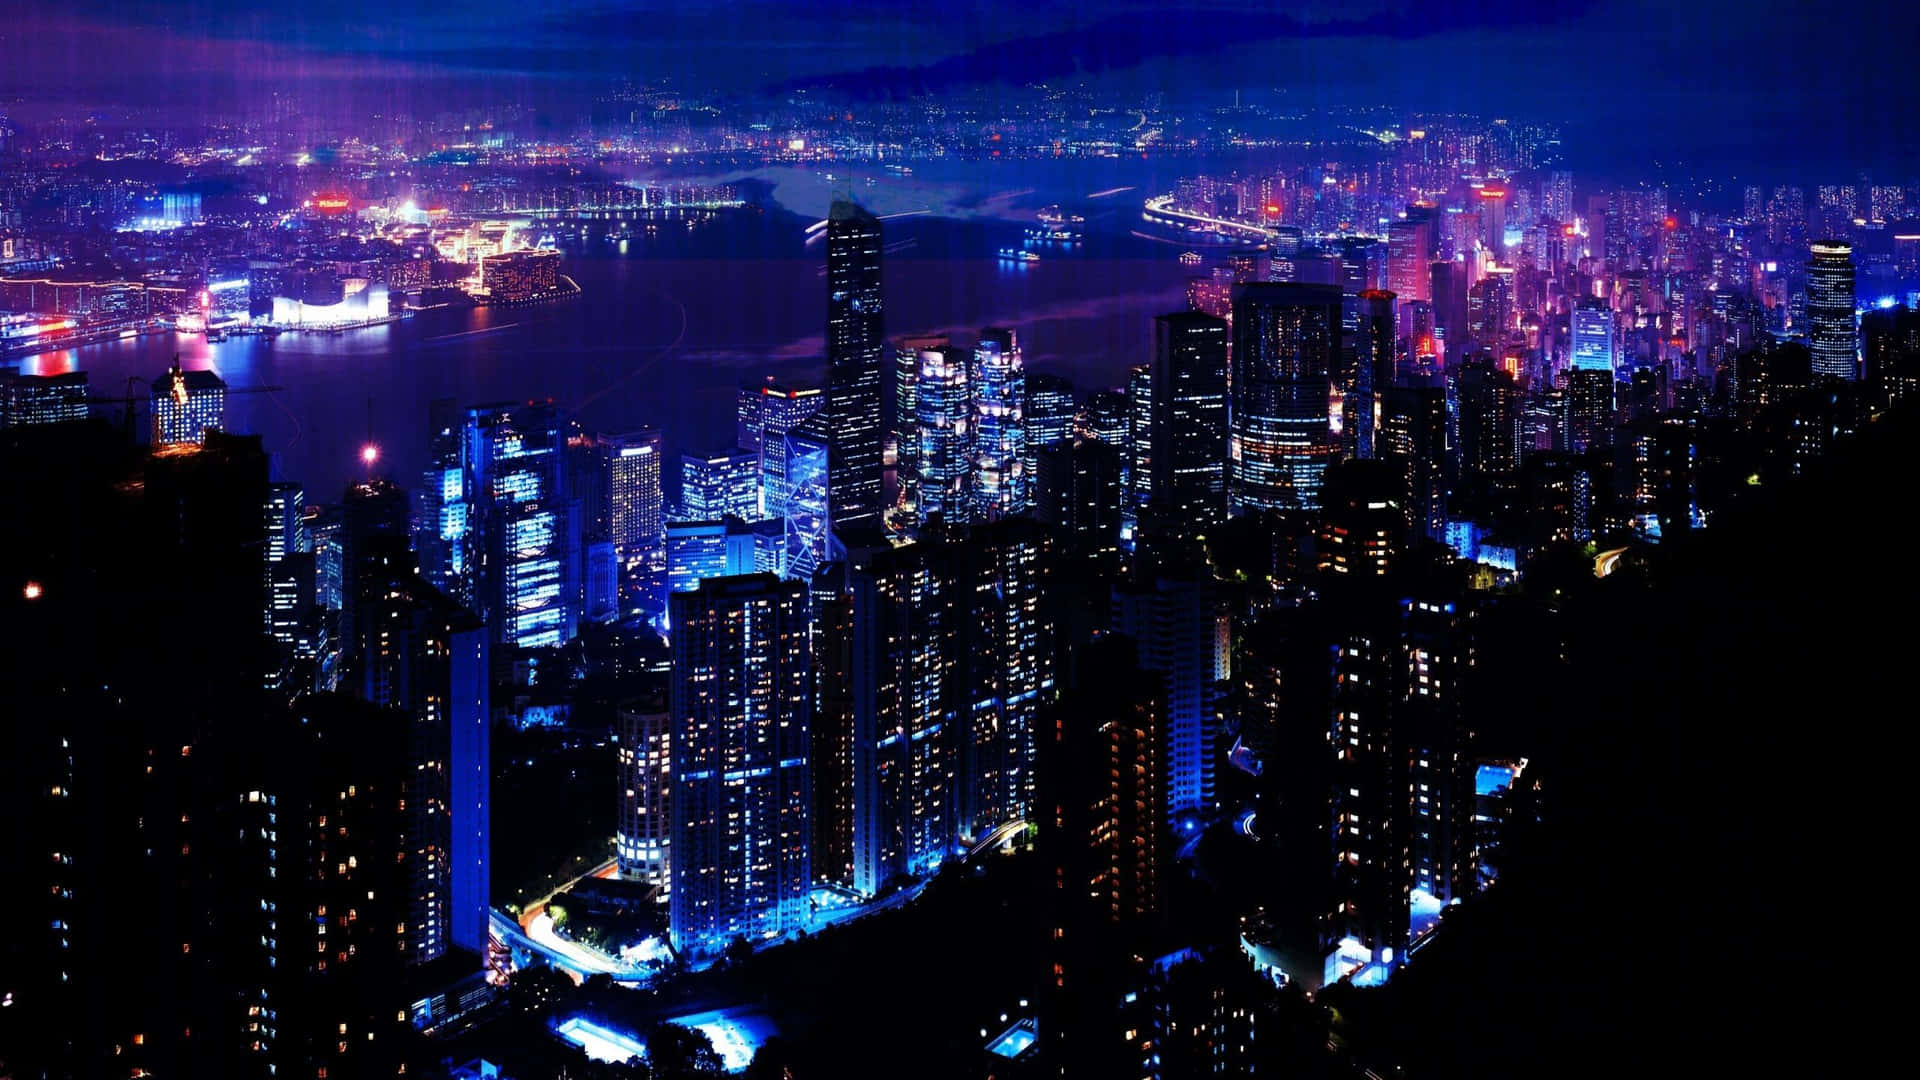 Explore the Futuristic City of Night City